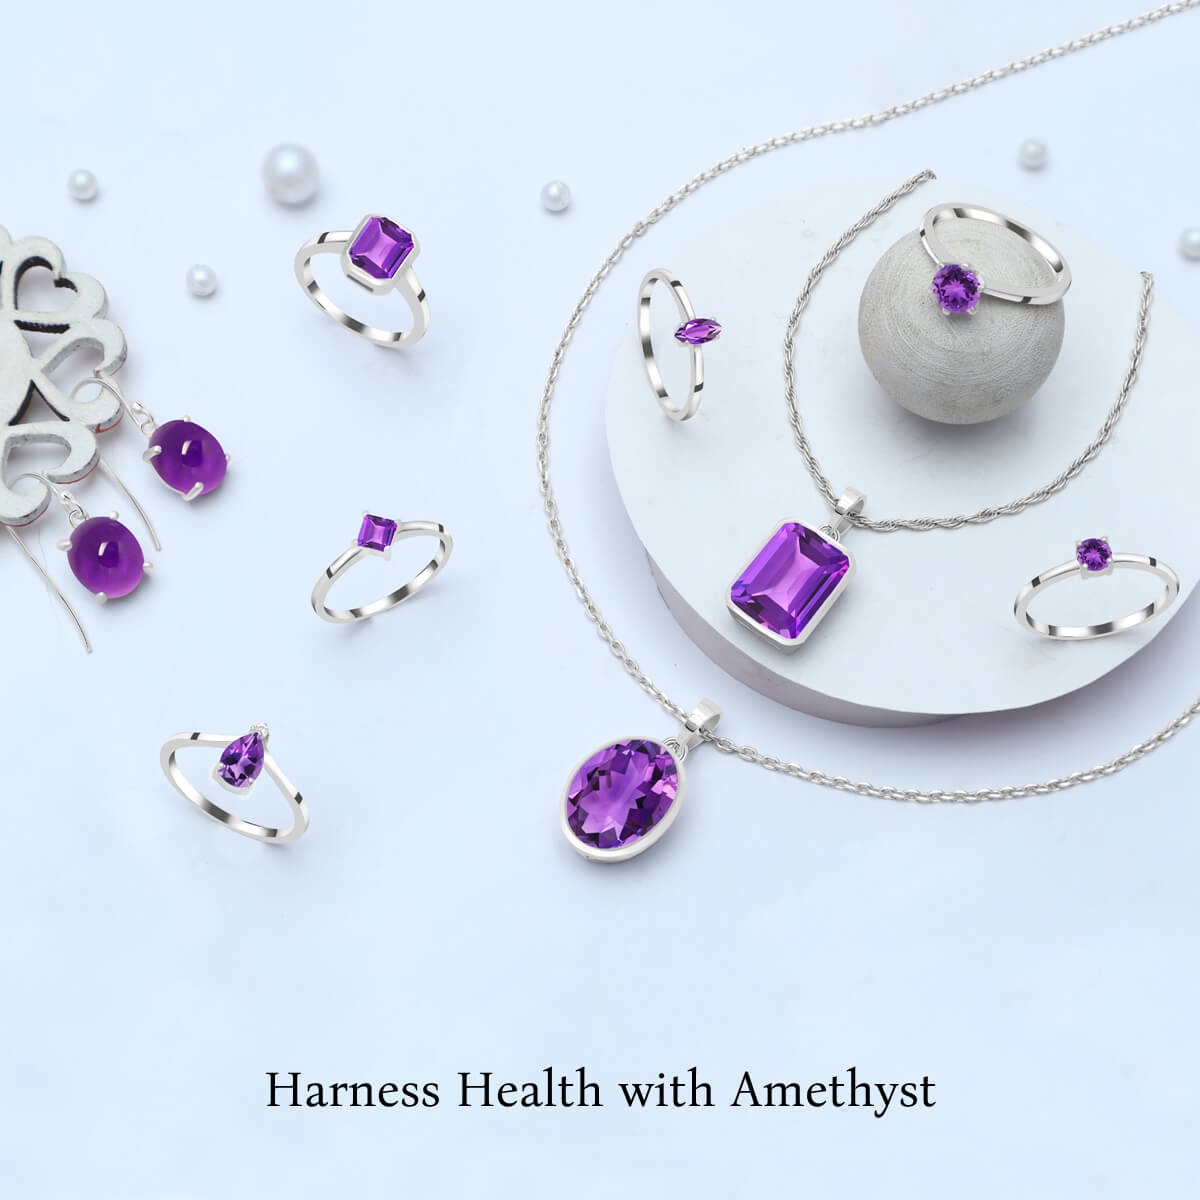 Amethyst Jewelry: Healing Properties and Benefits